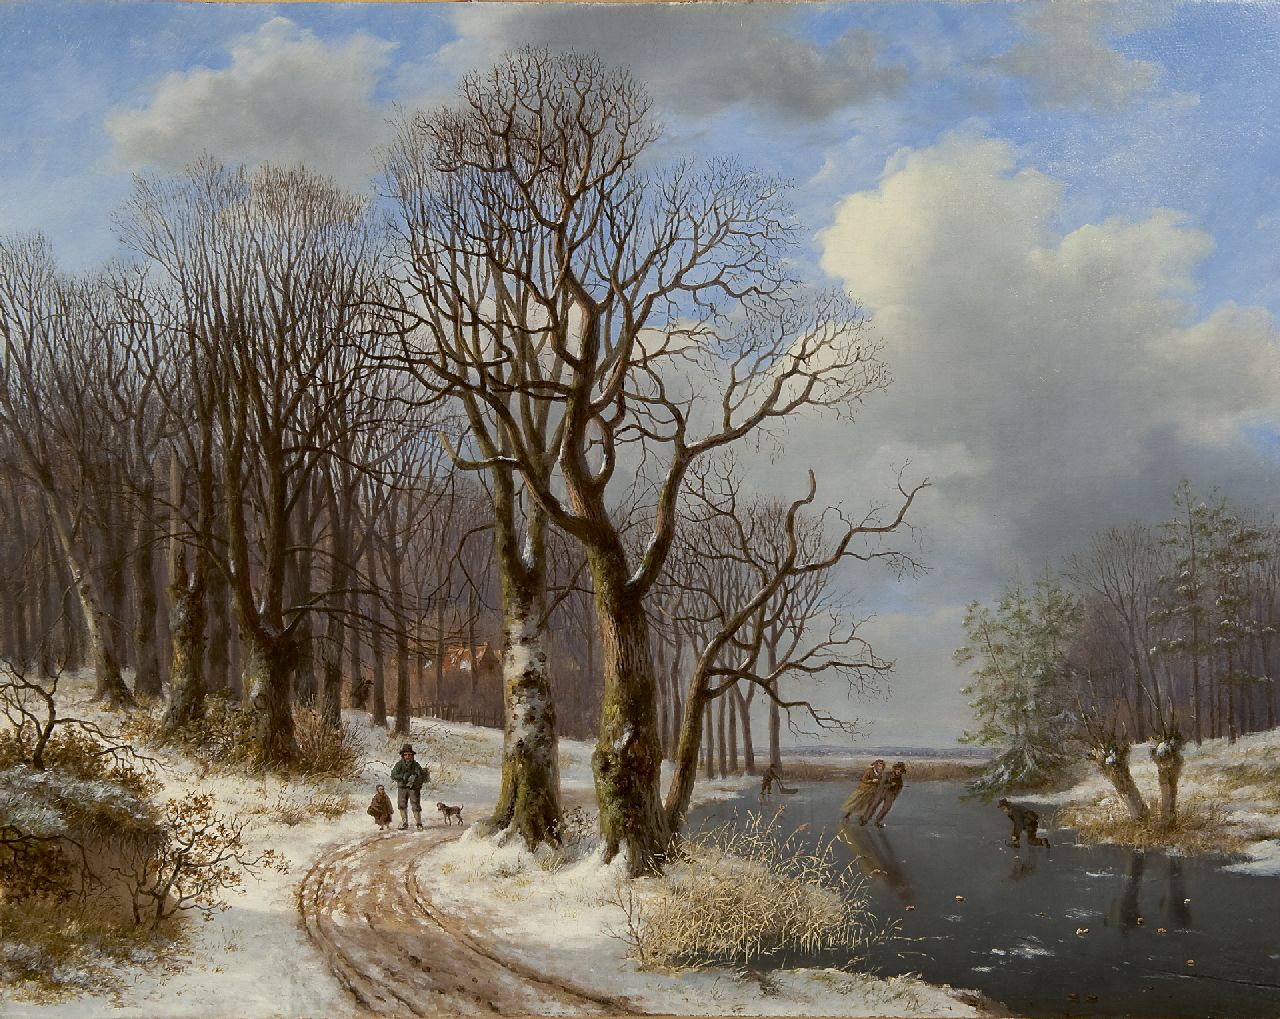 Mirani E.B.G.P.  | 'Everardus' Benedictus Gregorius Pagano Mirani, A winter landscape with skaters and countryfolk, oil on canvas 55.7 x 72.5 cm